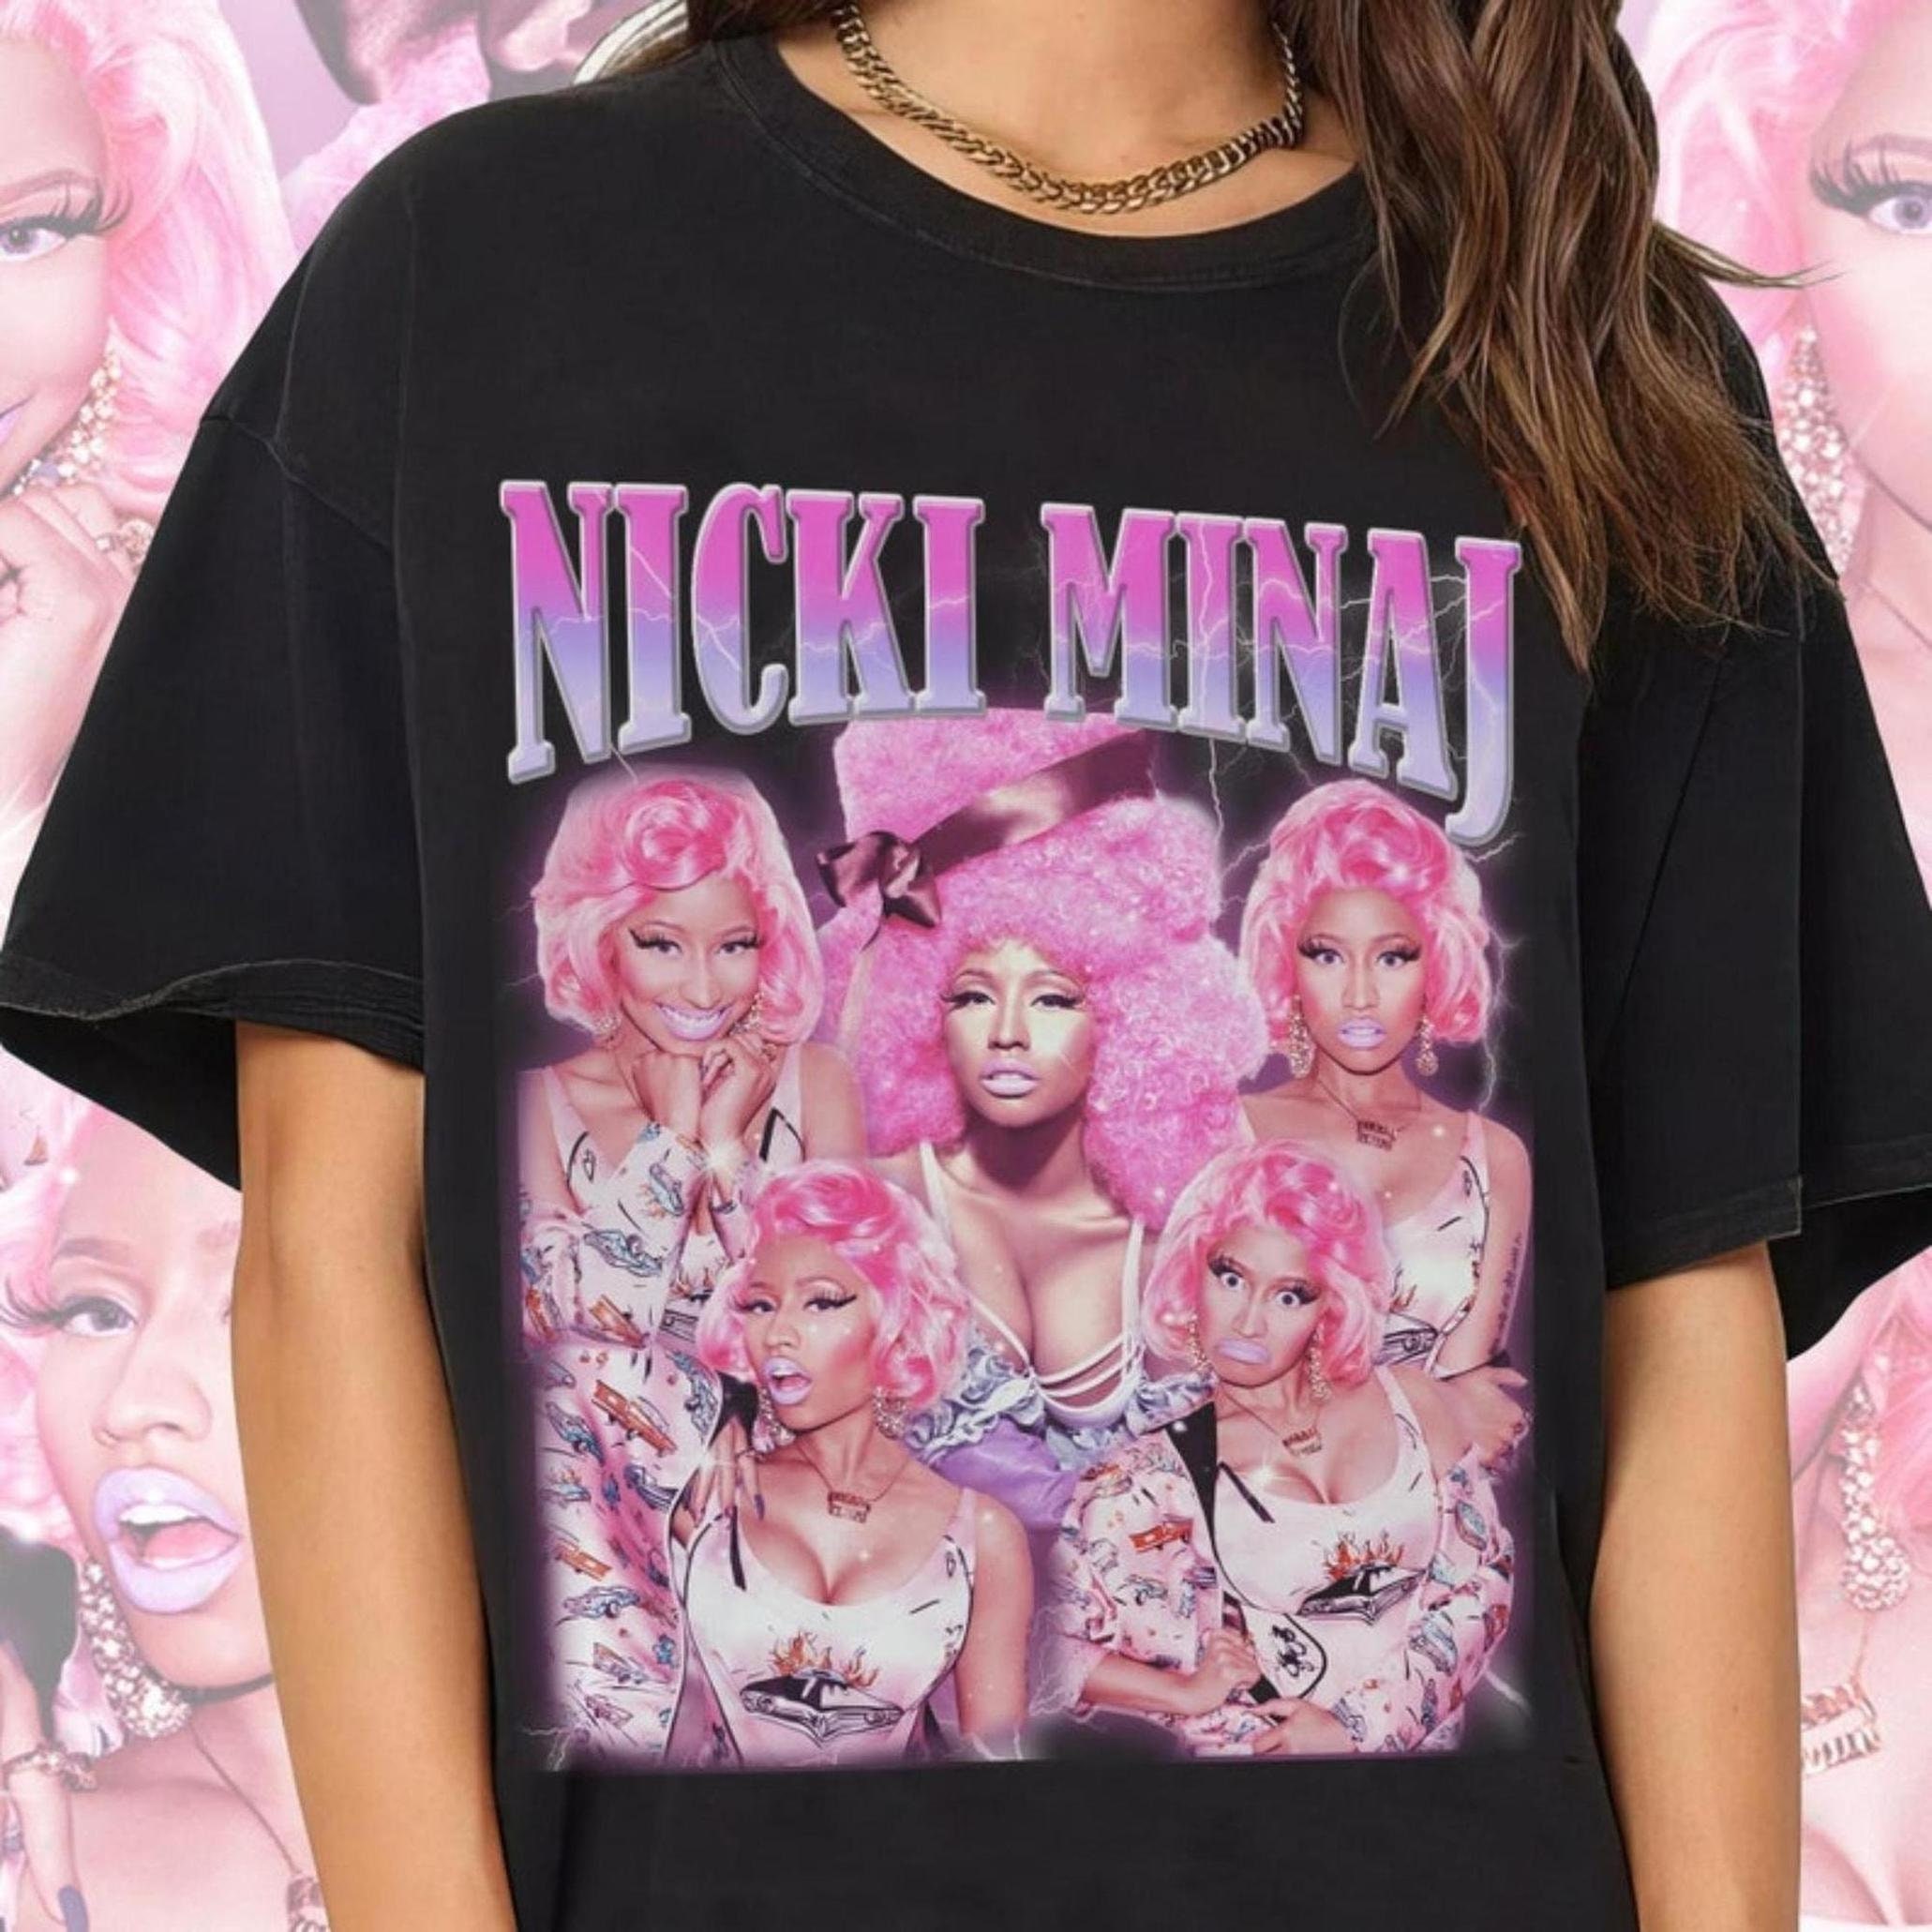 Nicki Minaj, Nickiminaj, Unisex Style Gift for Fans, T-shirt, Crew ...